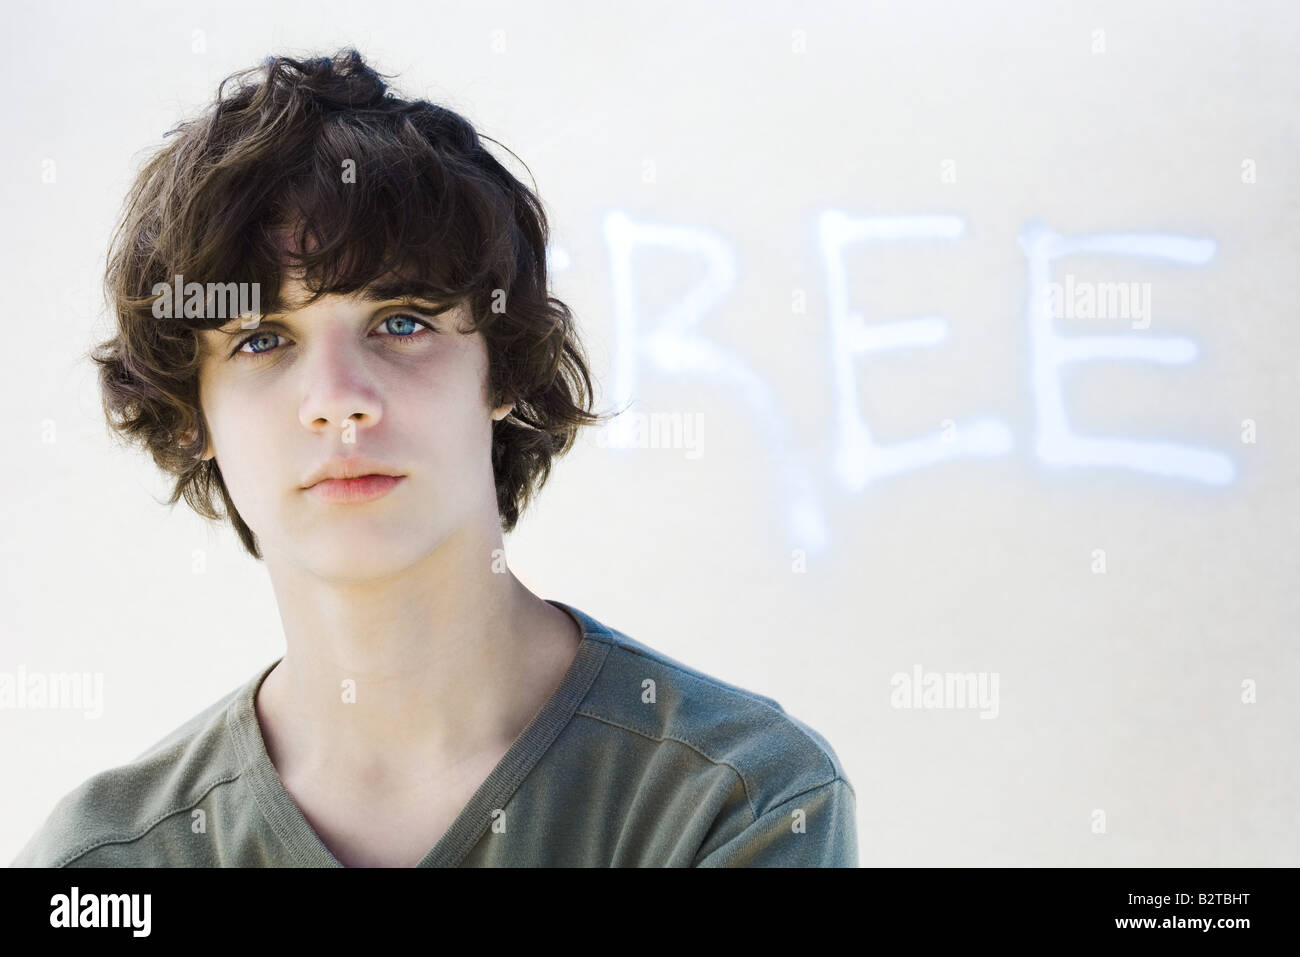 Teenage boy looking at camera, in front of graffiti Stock Photo